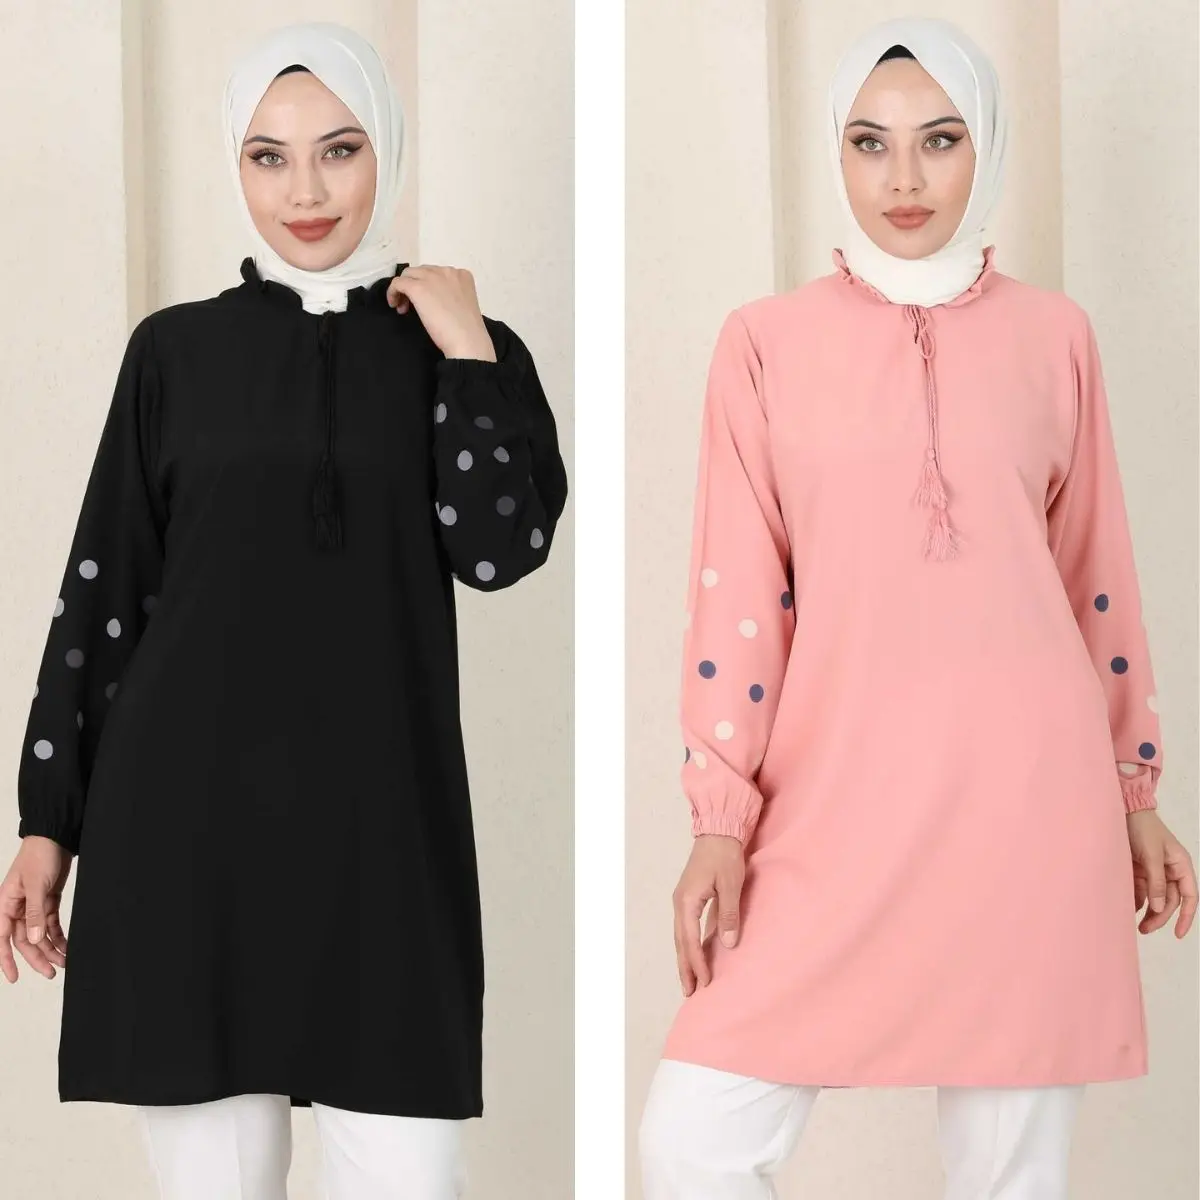 Polka Dot Sleeves Detailed Hijab Tunic Frilly Lace-Up Collar Seasonal Women's Fashion Muslim Clothing Islamic Abaya Dress Casual